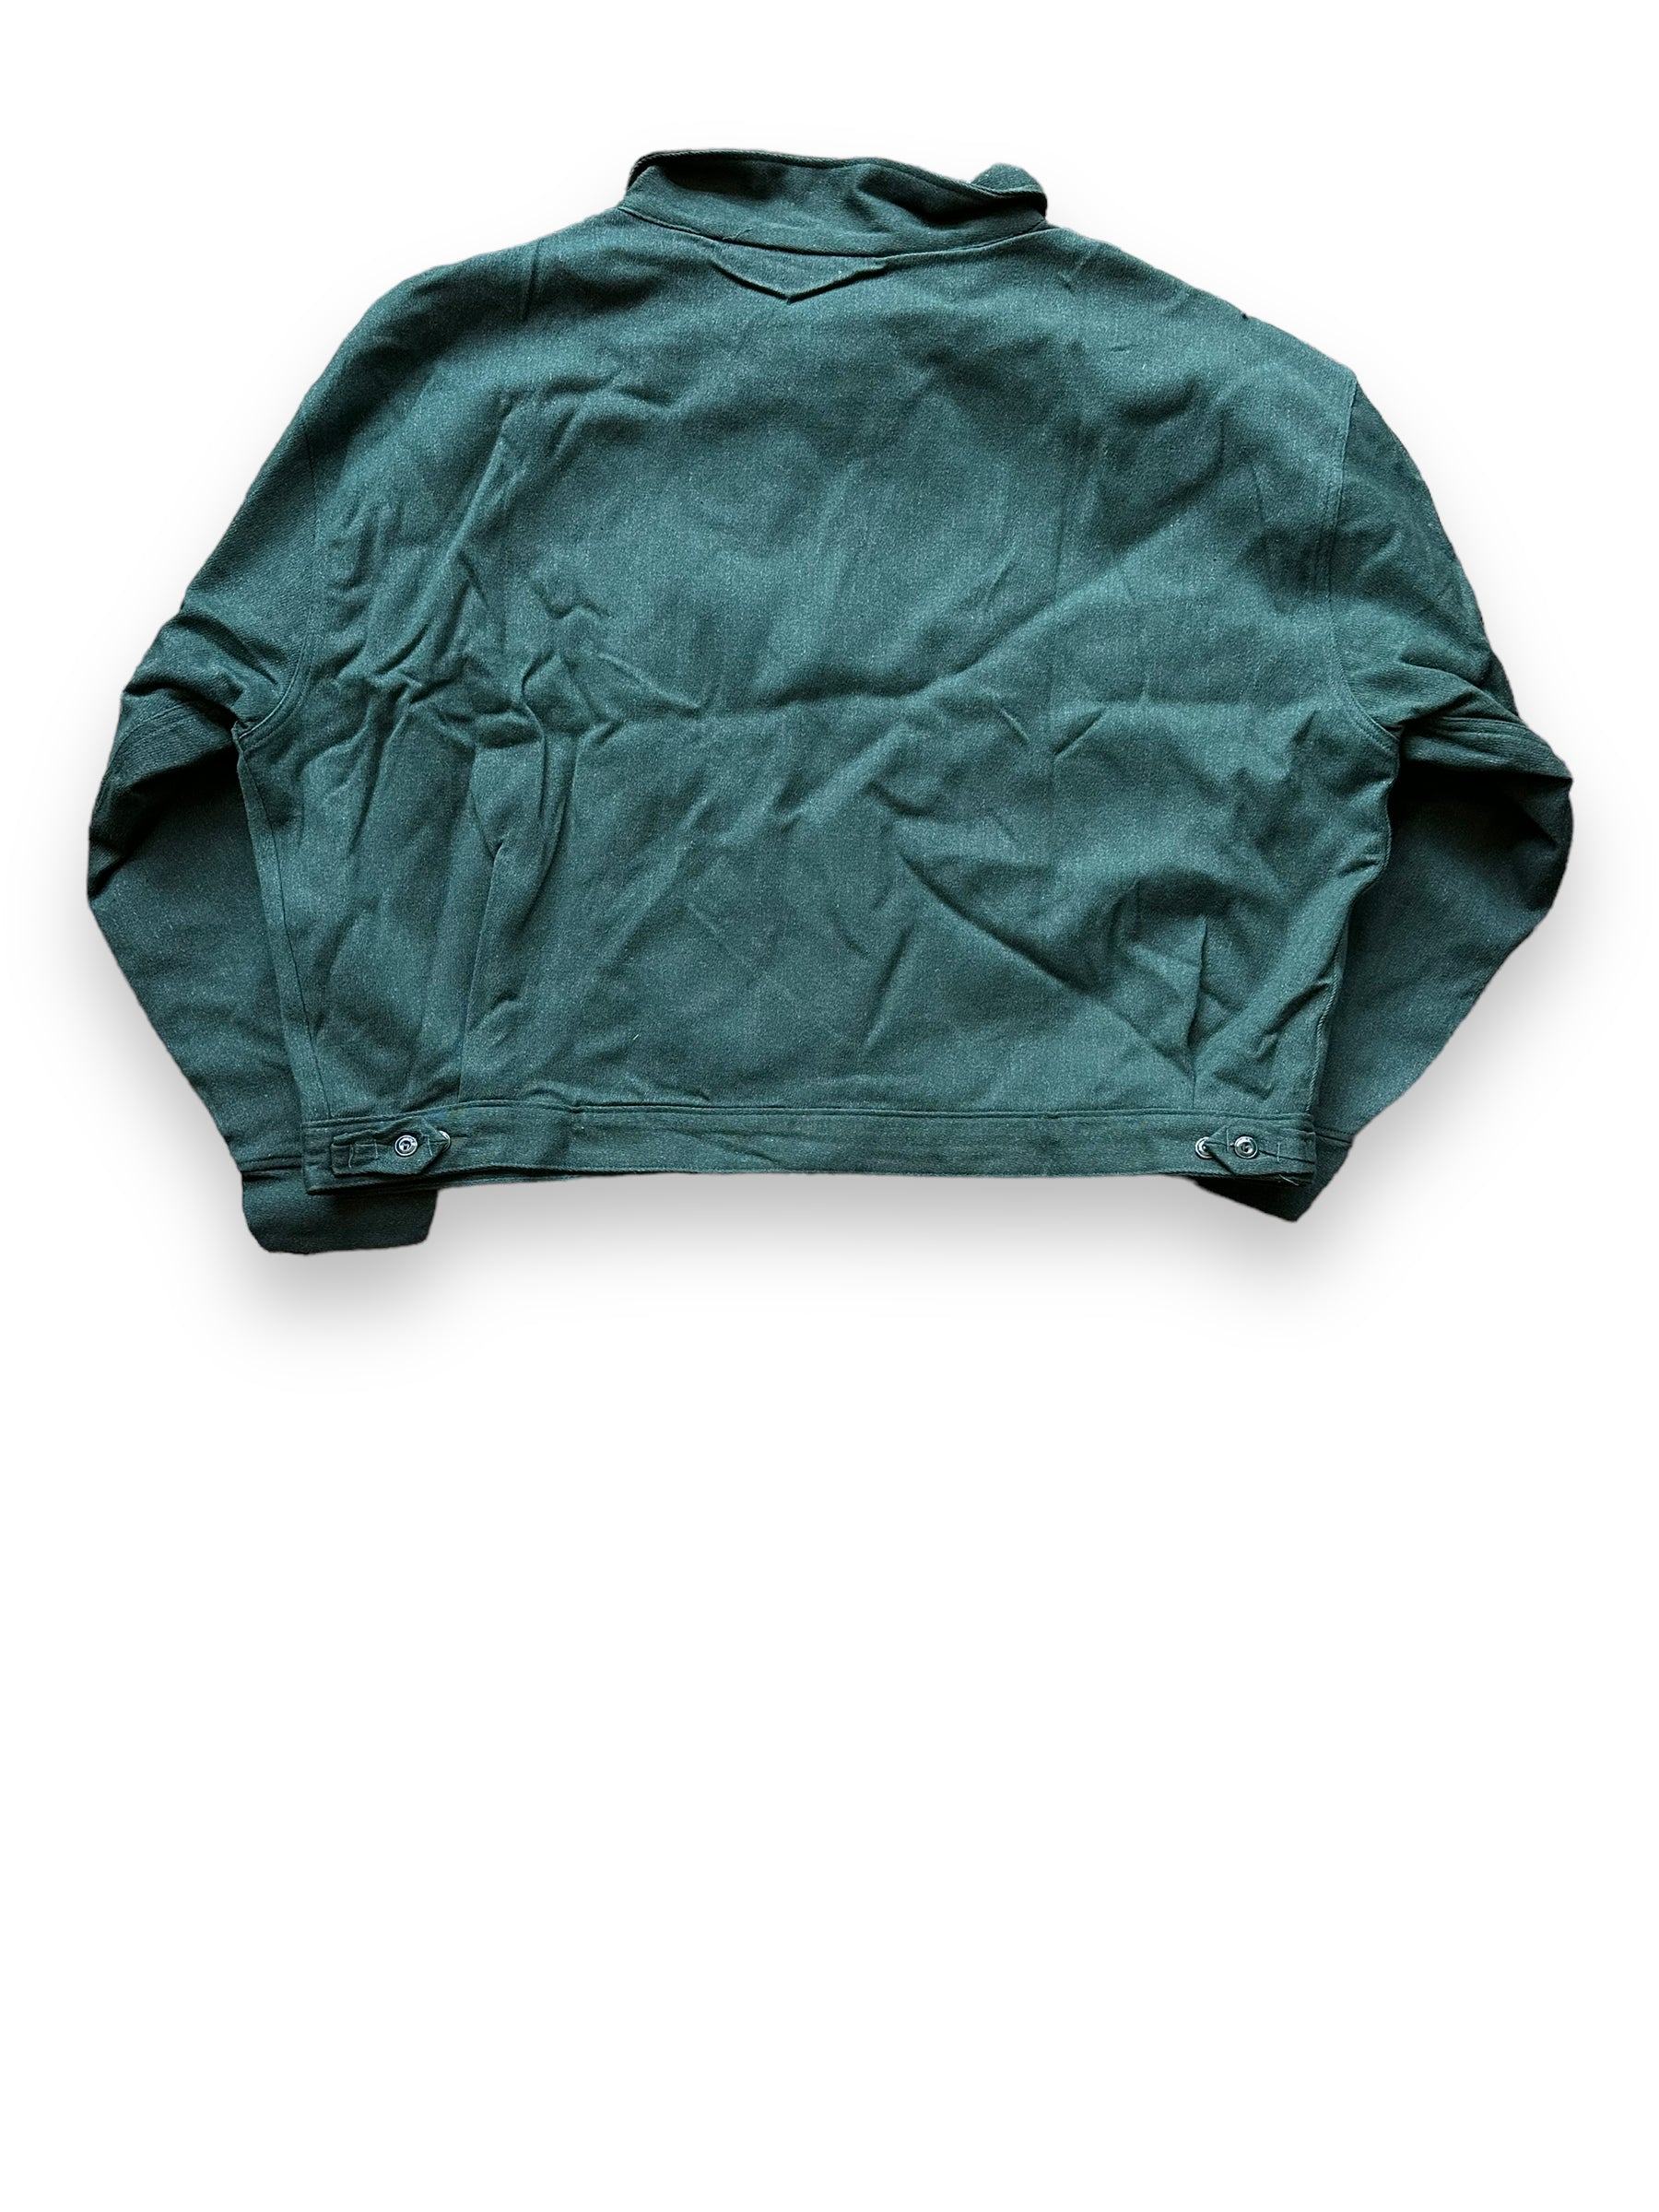 Rear View on Vintage Green Blanket Lined Gas Station Jacket SZ 56 | Vintage Workwear Jacket Seattle | Seattle Vintage Clothing